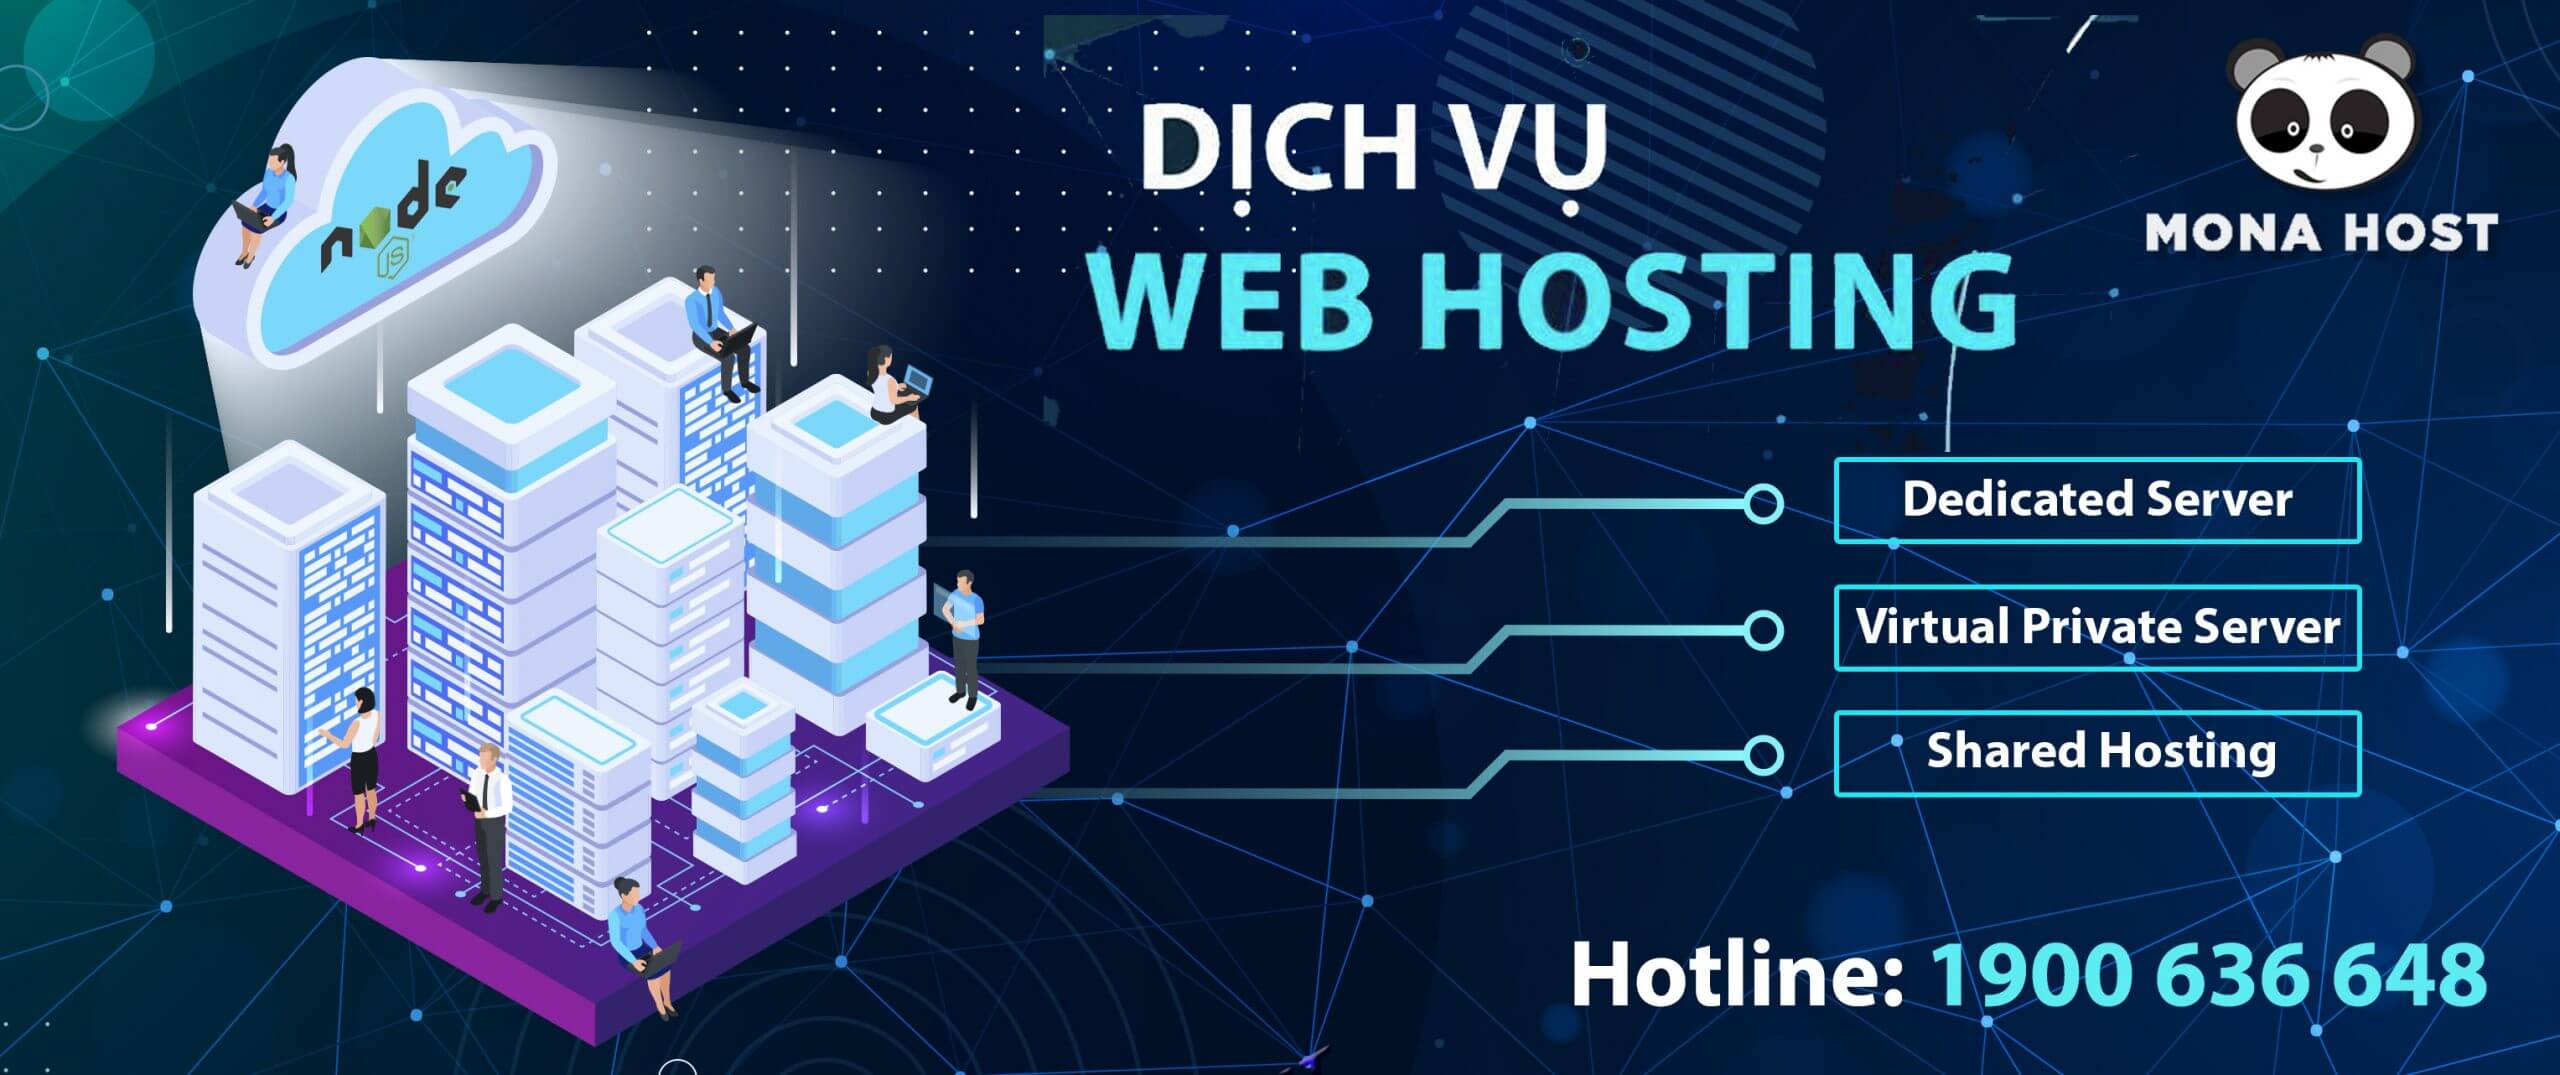 Dịch vụ web hosting NodeJS - Mona Media